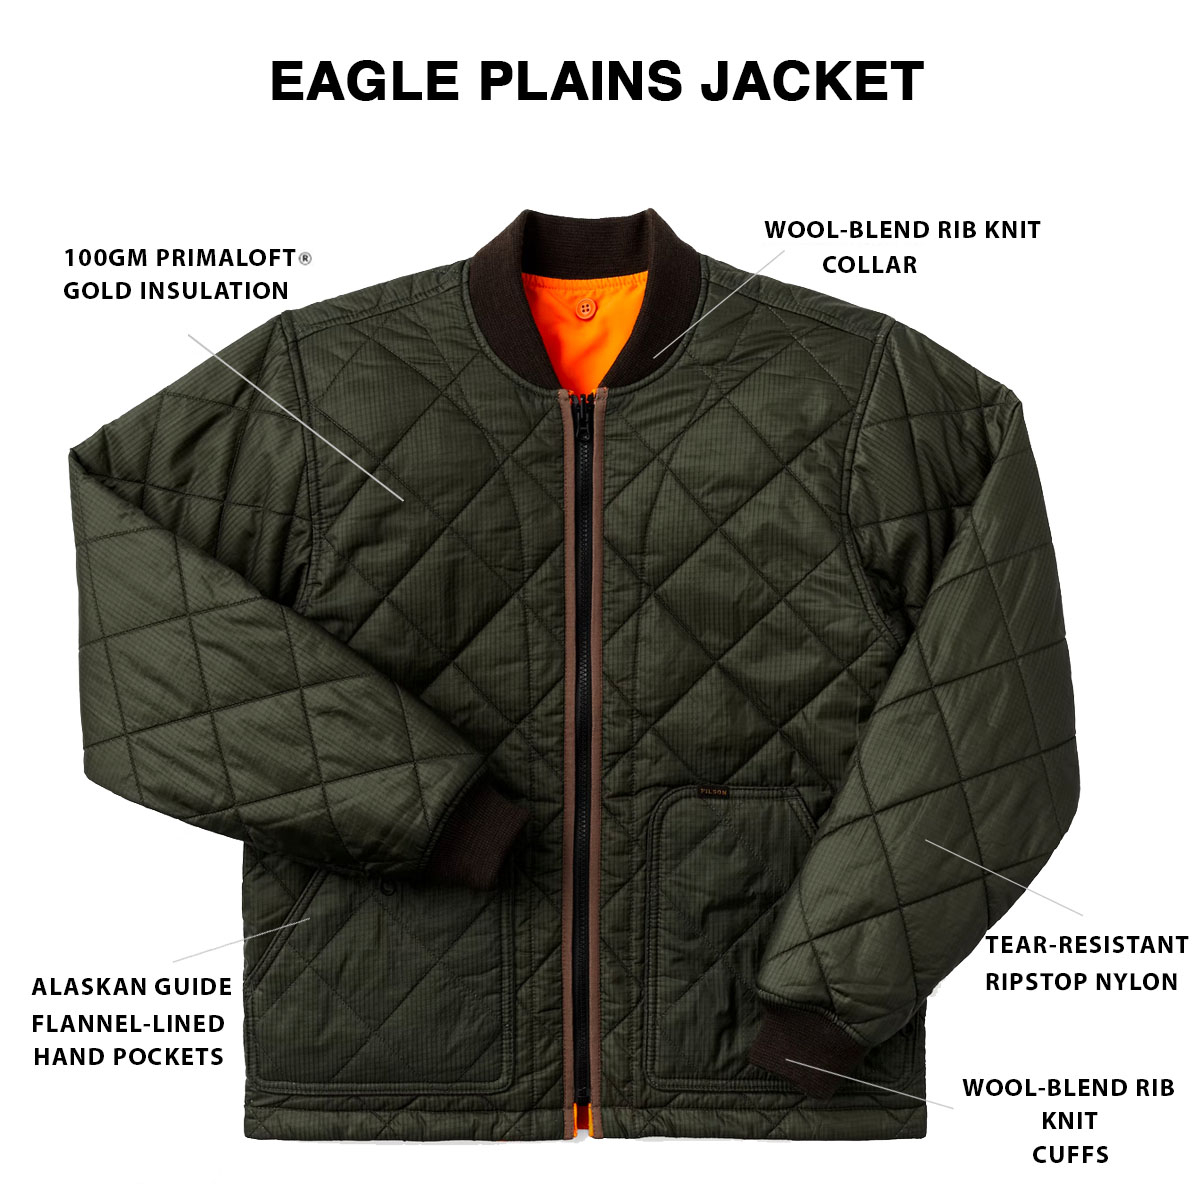 Filson Eagle Plains Jacket Liner Surplus Green Blaze, with Cordura® Ripstop nylon and 100gm PrimaLoft® Gold insulation